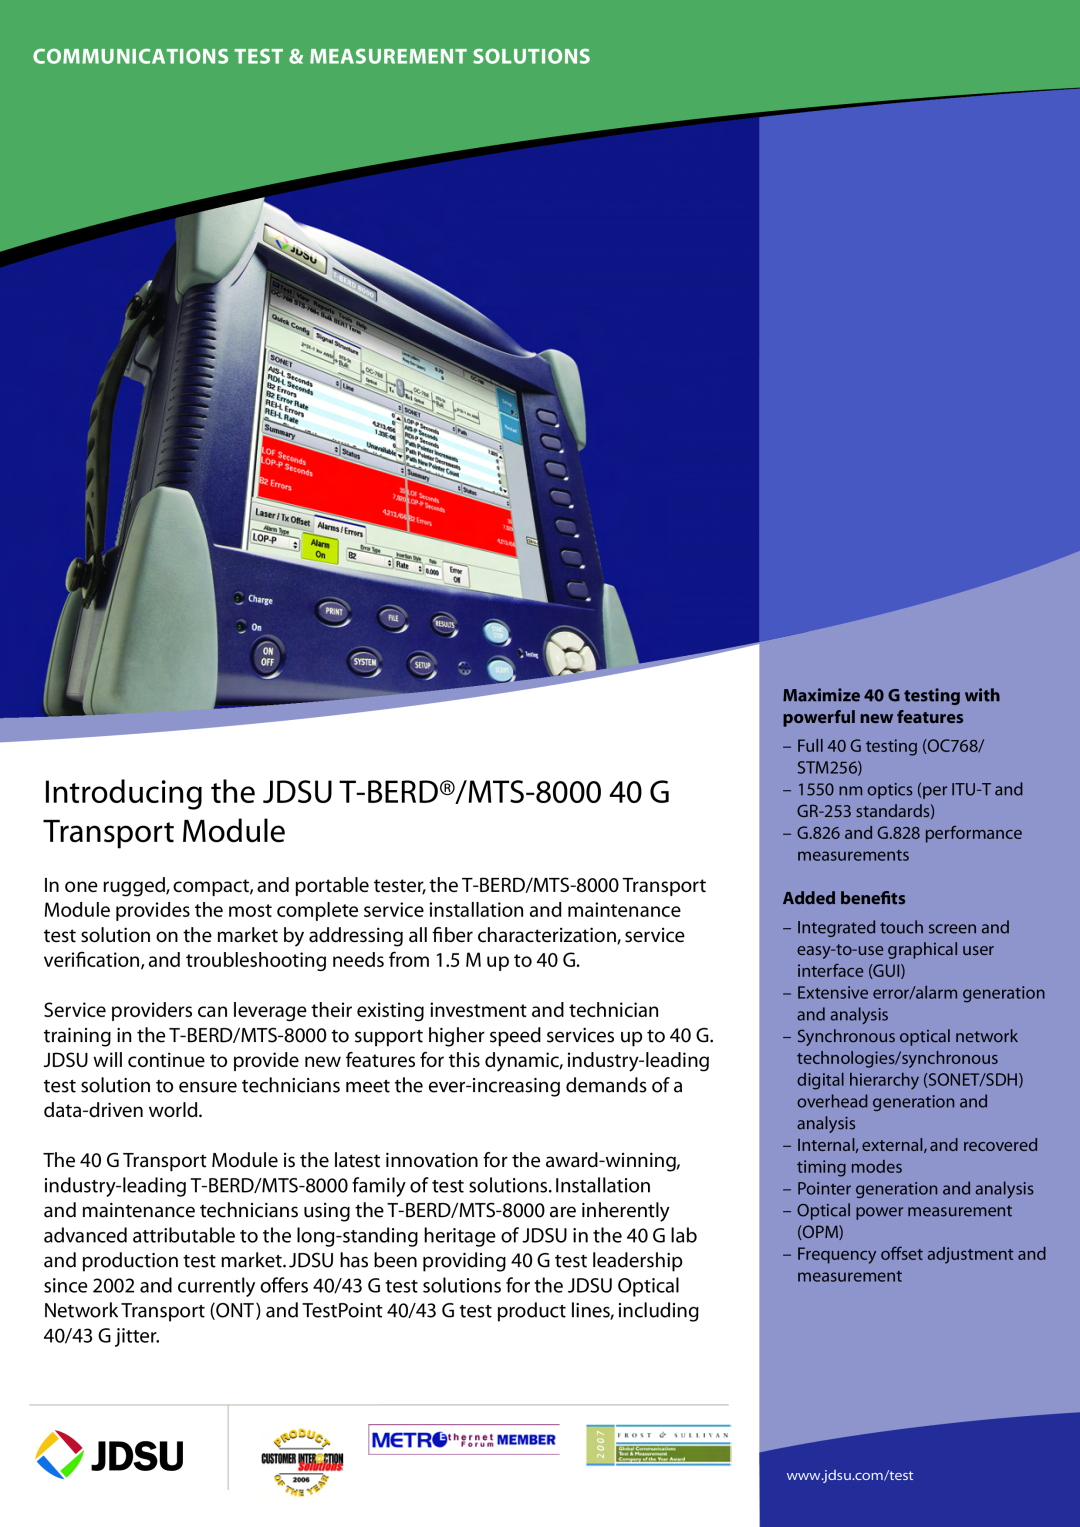 JDS Uniphase T-BERD/MTS-8000 manual Introducing the NewGen Module for the JDSU MTS 